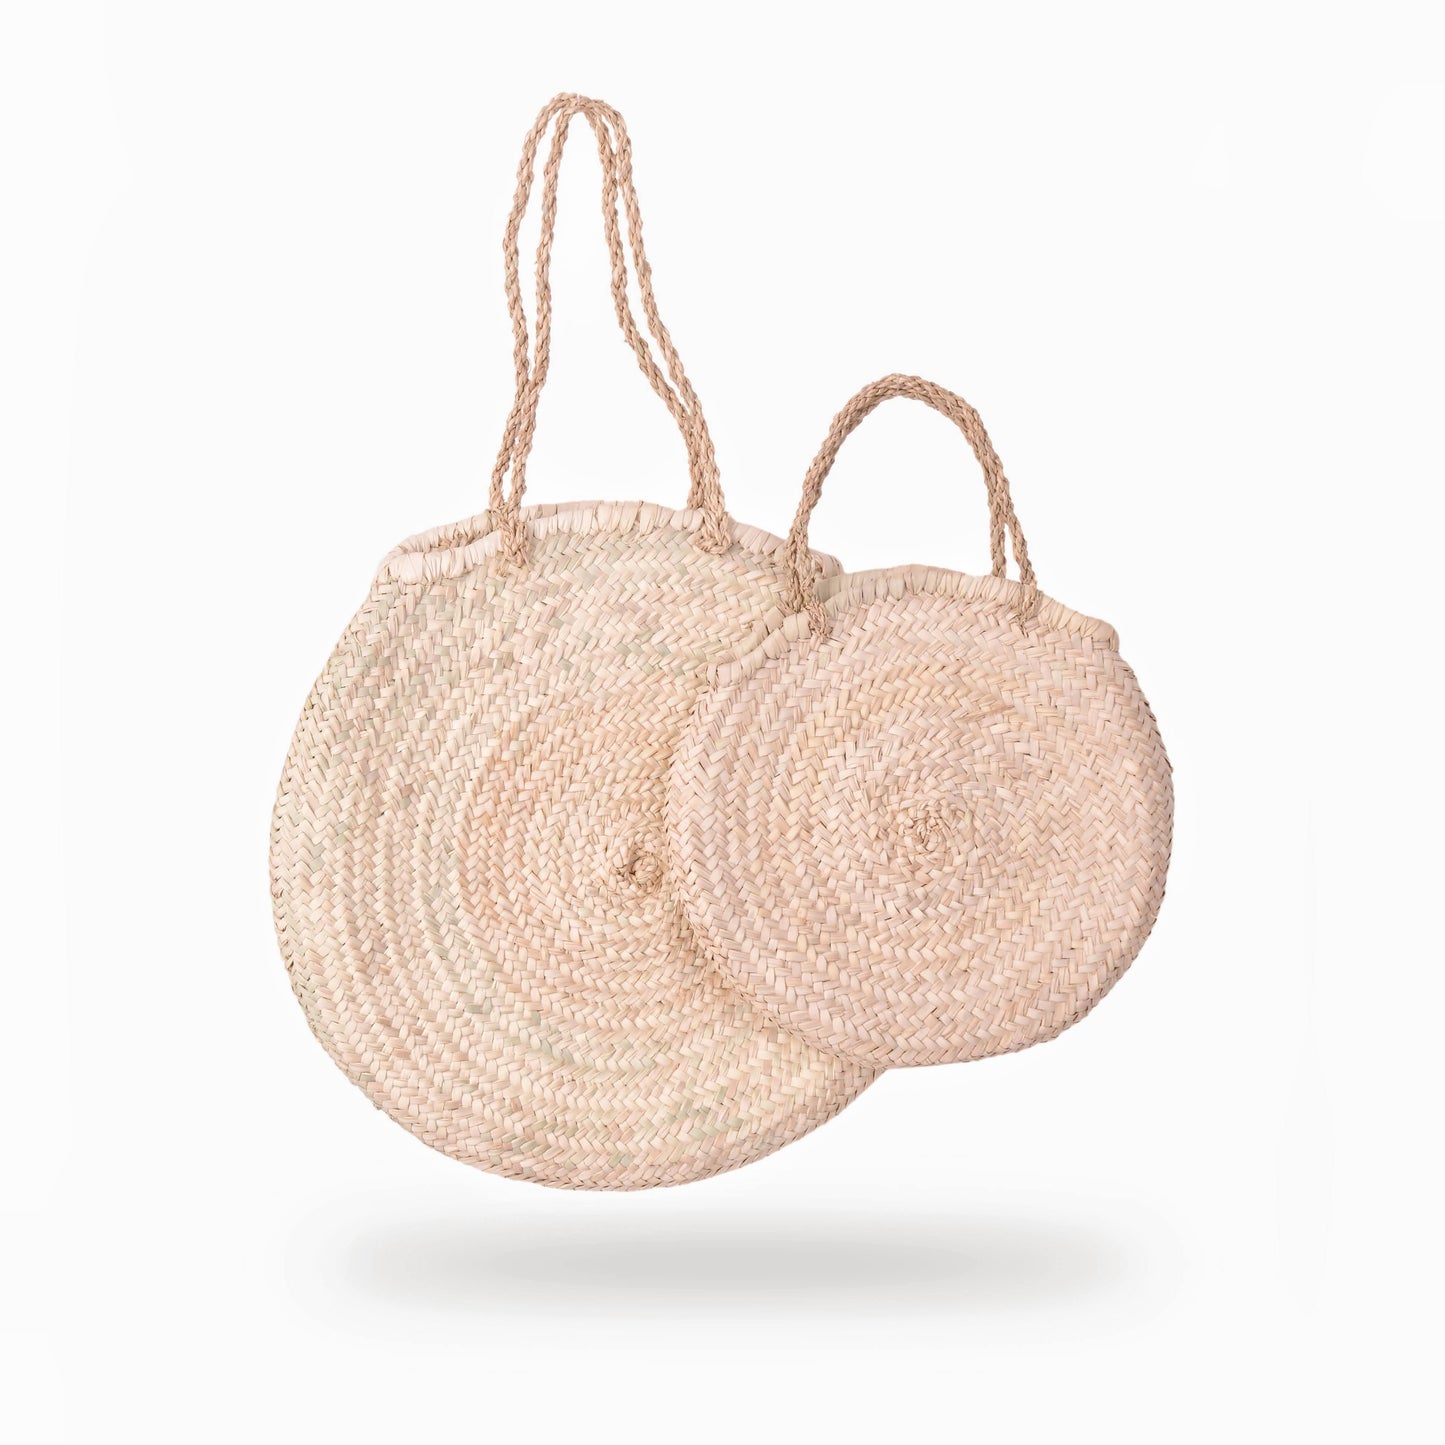 Round woven bag